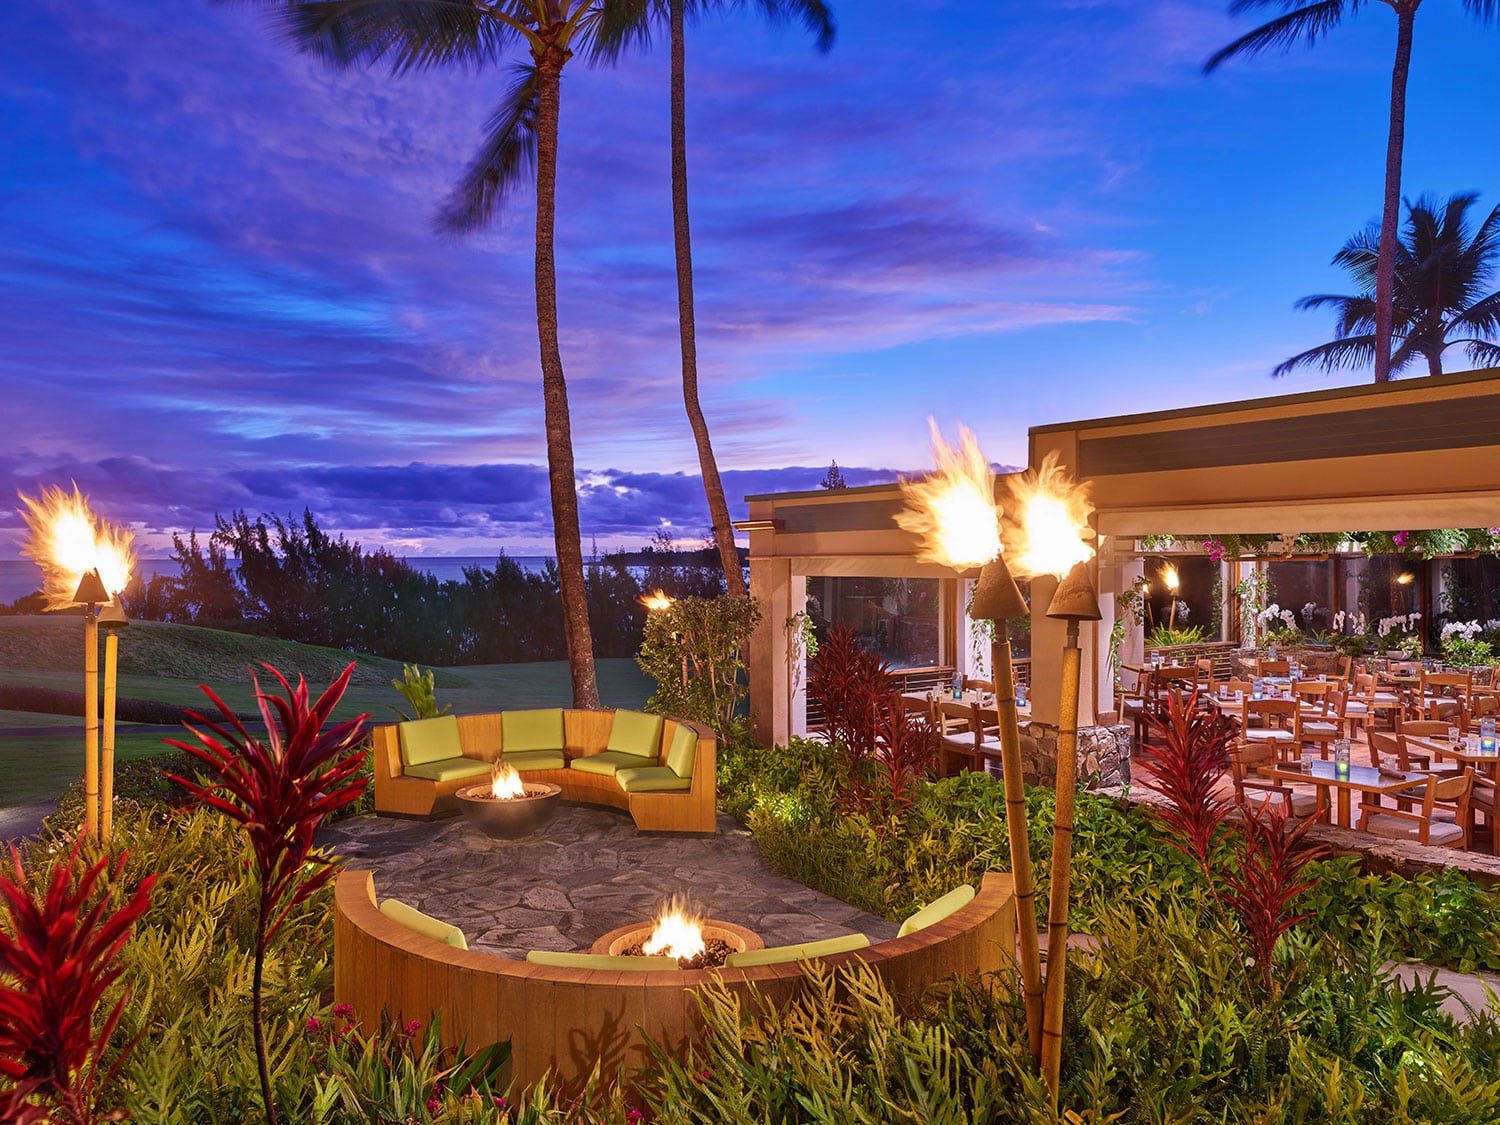 The outdoor seating area at The Banyan Tree restaurant at The Ritz-Carlton Maui, Kapalua, in Hawaii.